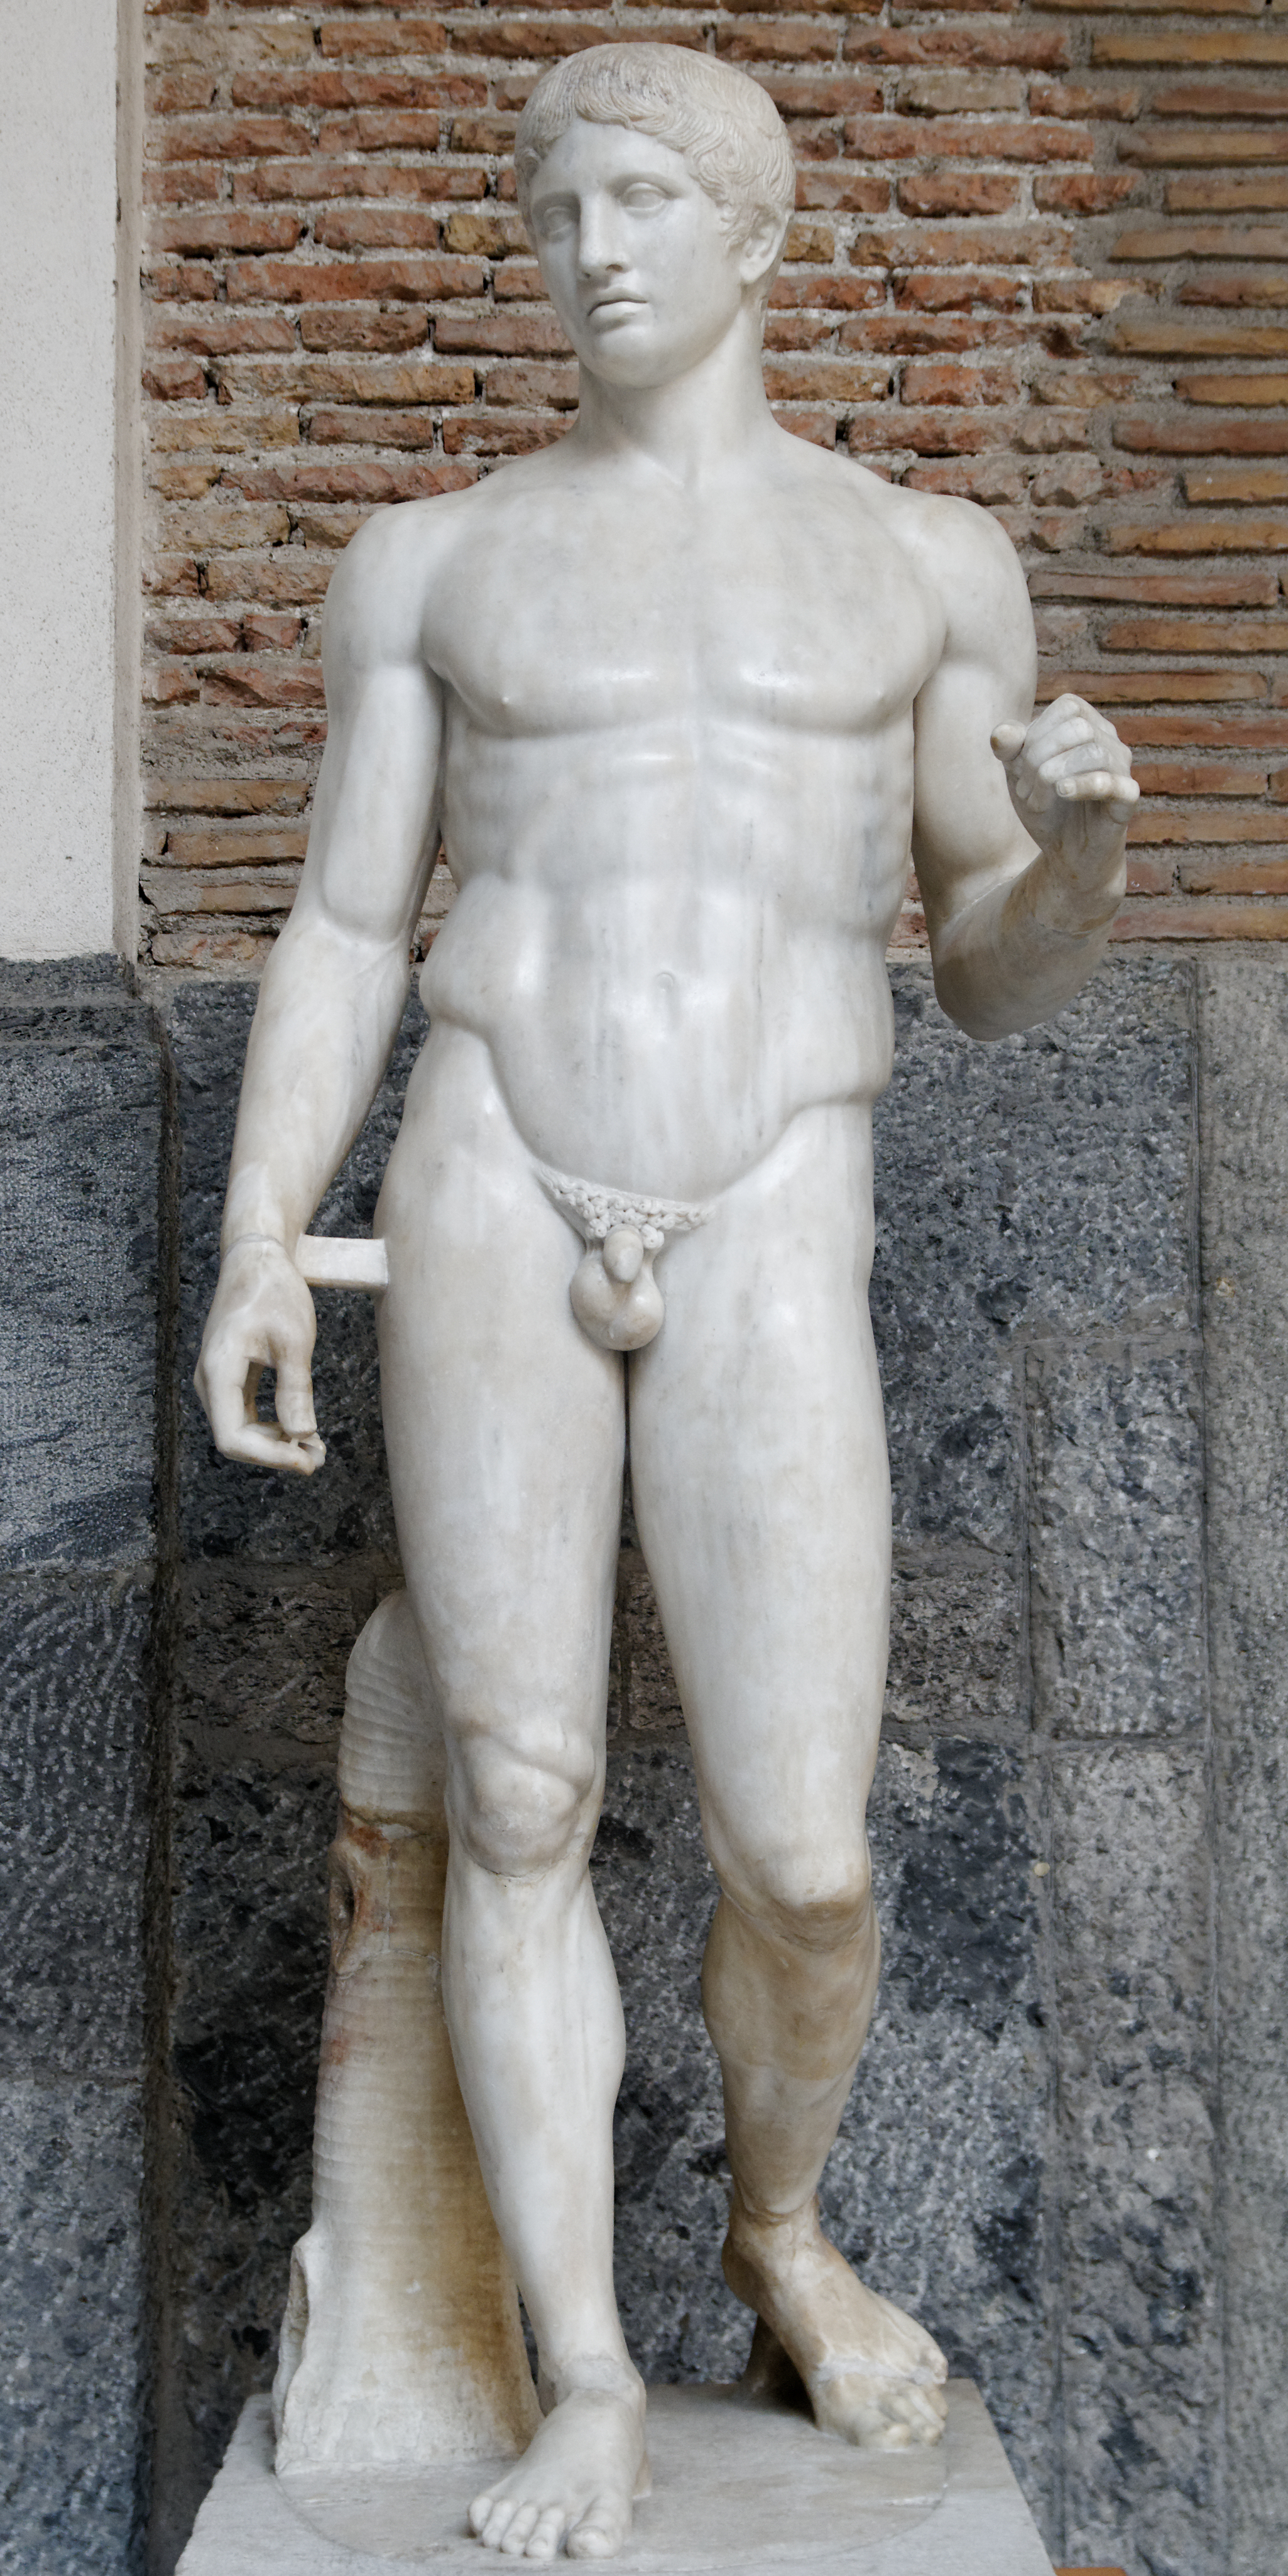 http://upload.wikimedia.org/wikipedia/commons/2/2c/Doryphoros_MAN_Napoli_Inv6011.jpg